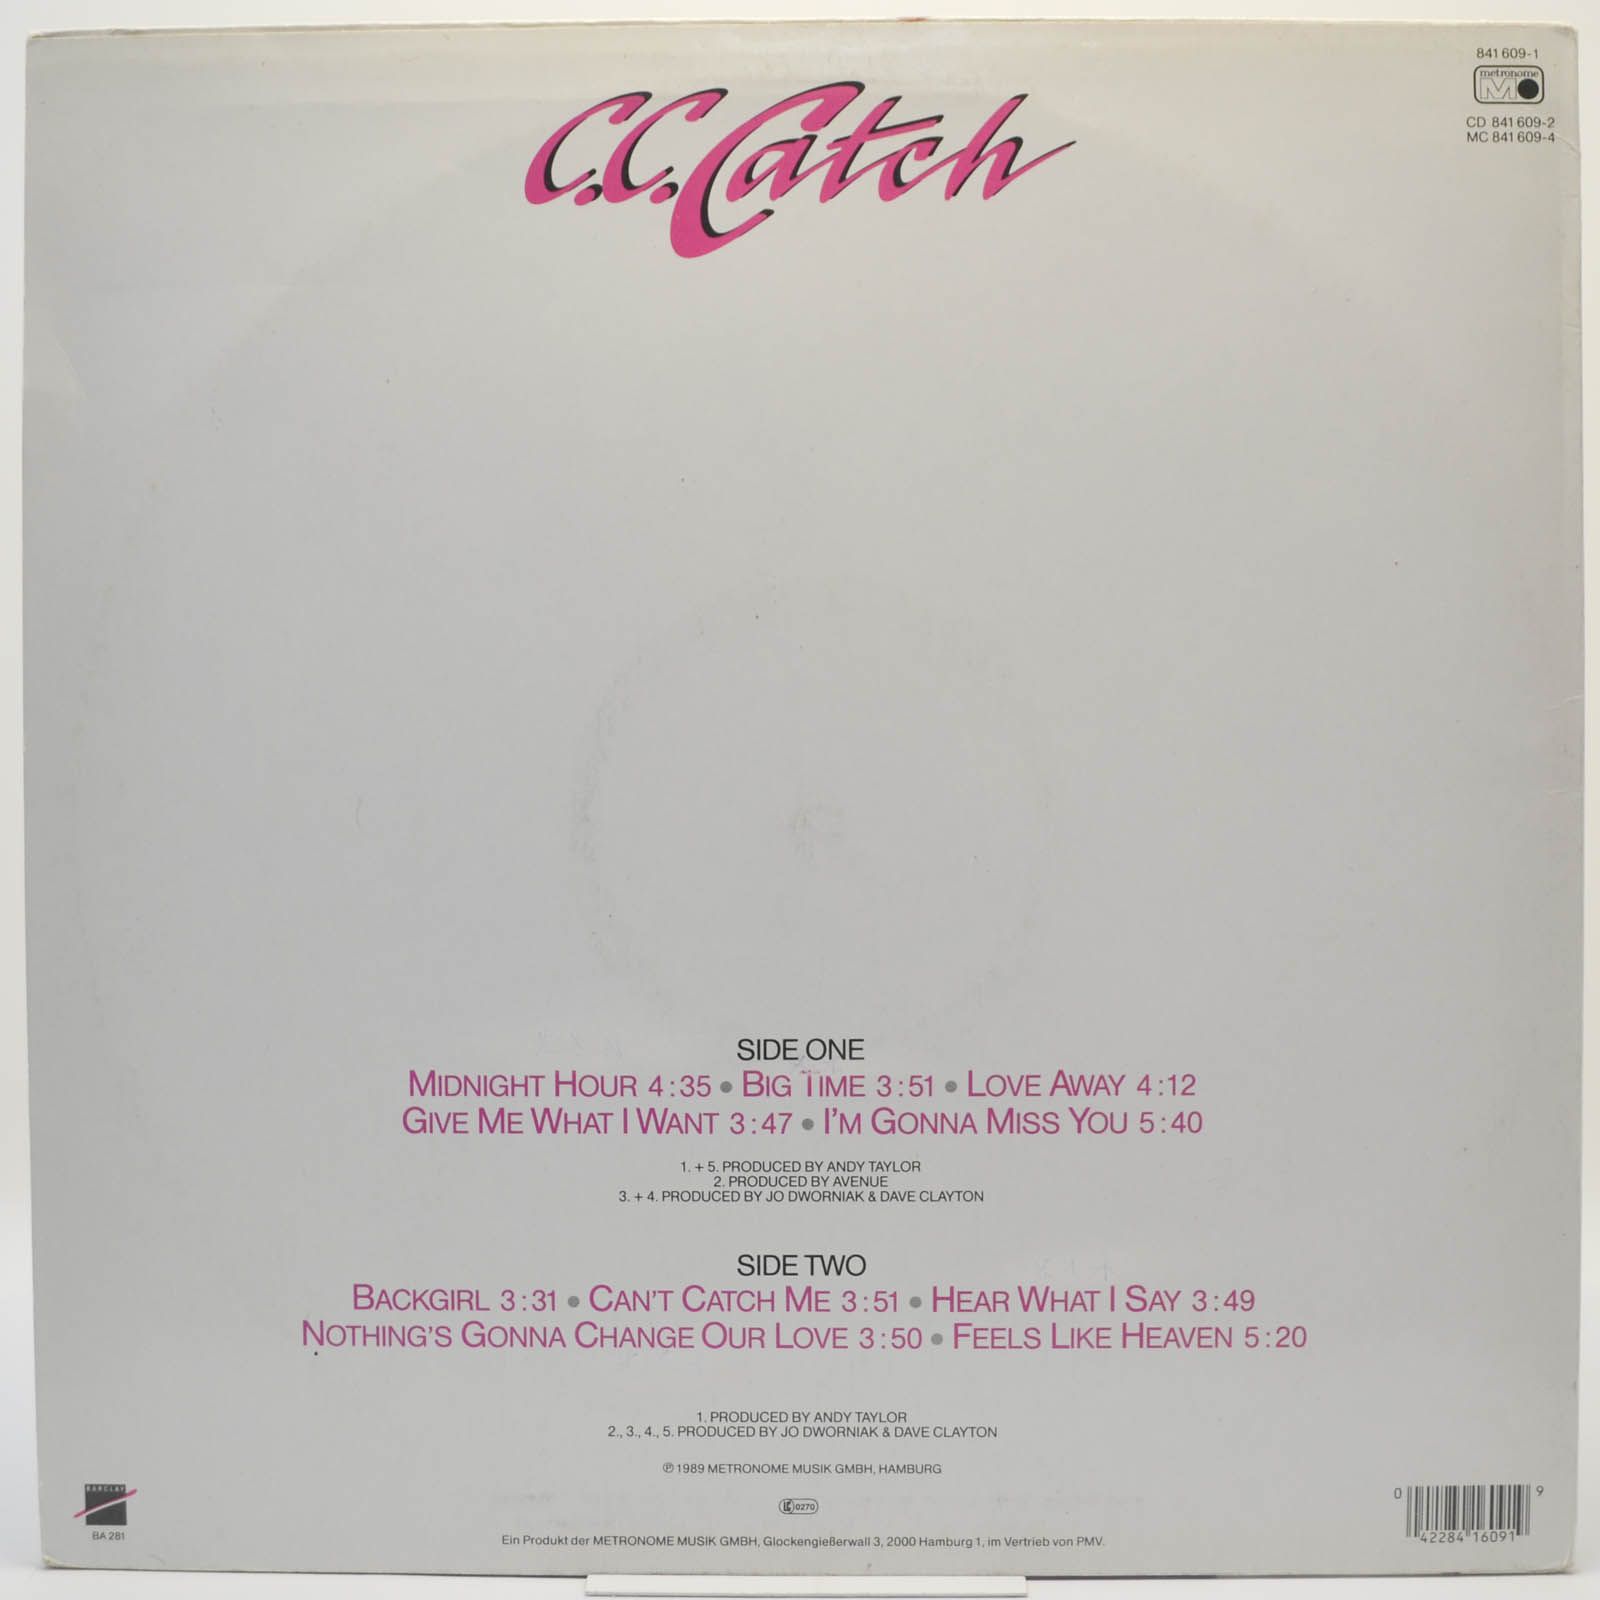 C.C. Catch — Hear What I Say, 1989